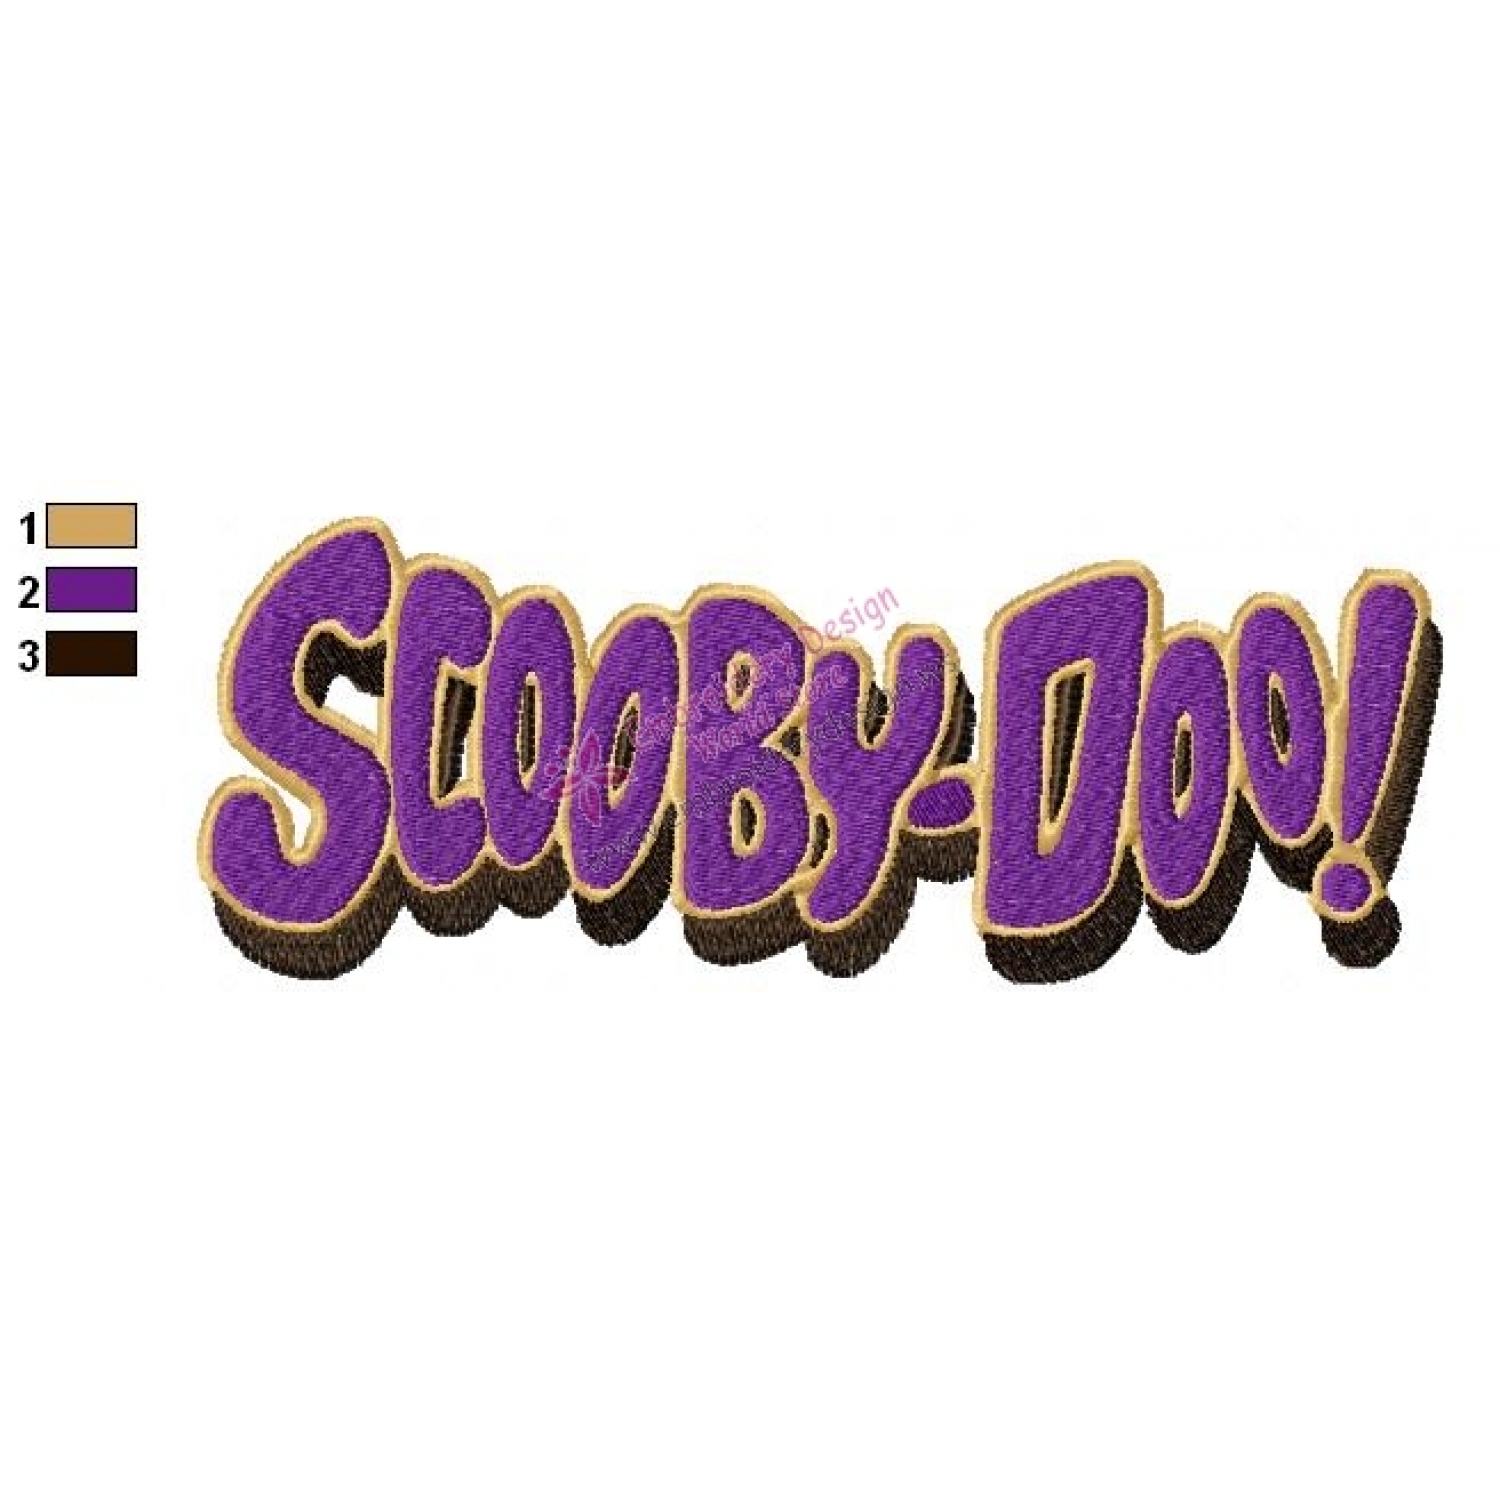  Scooby  doo  Logos 